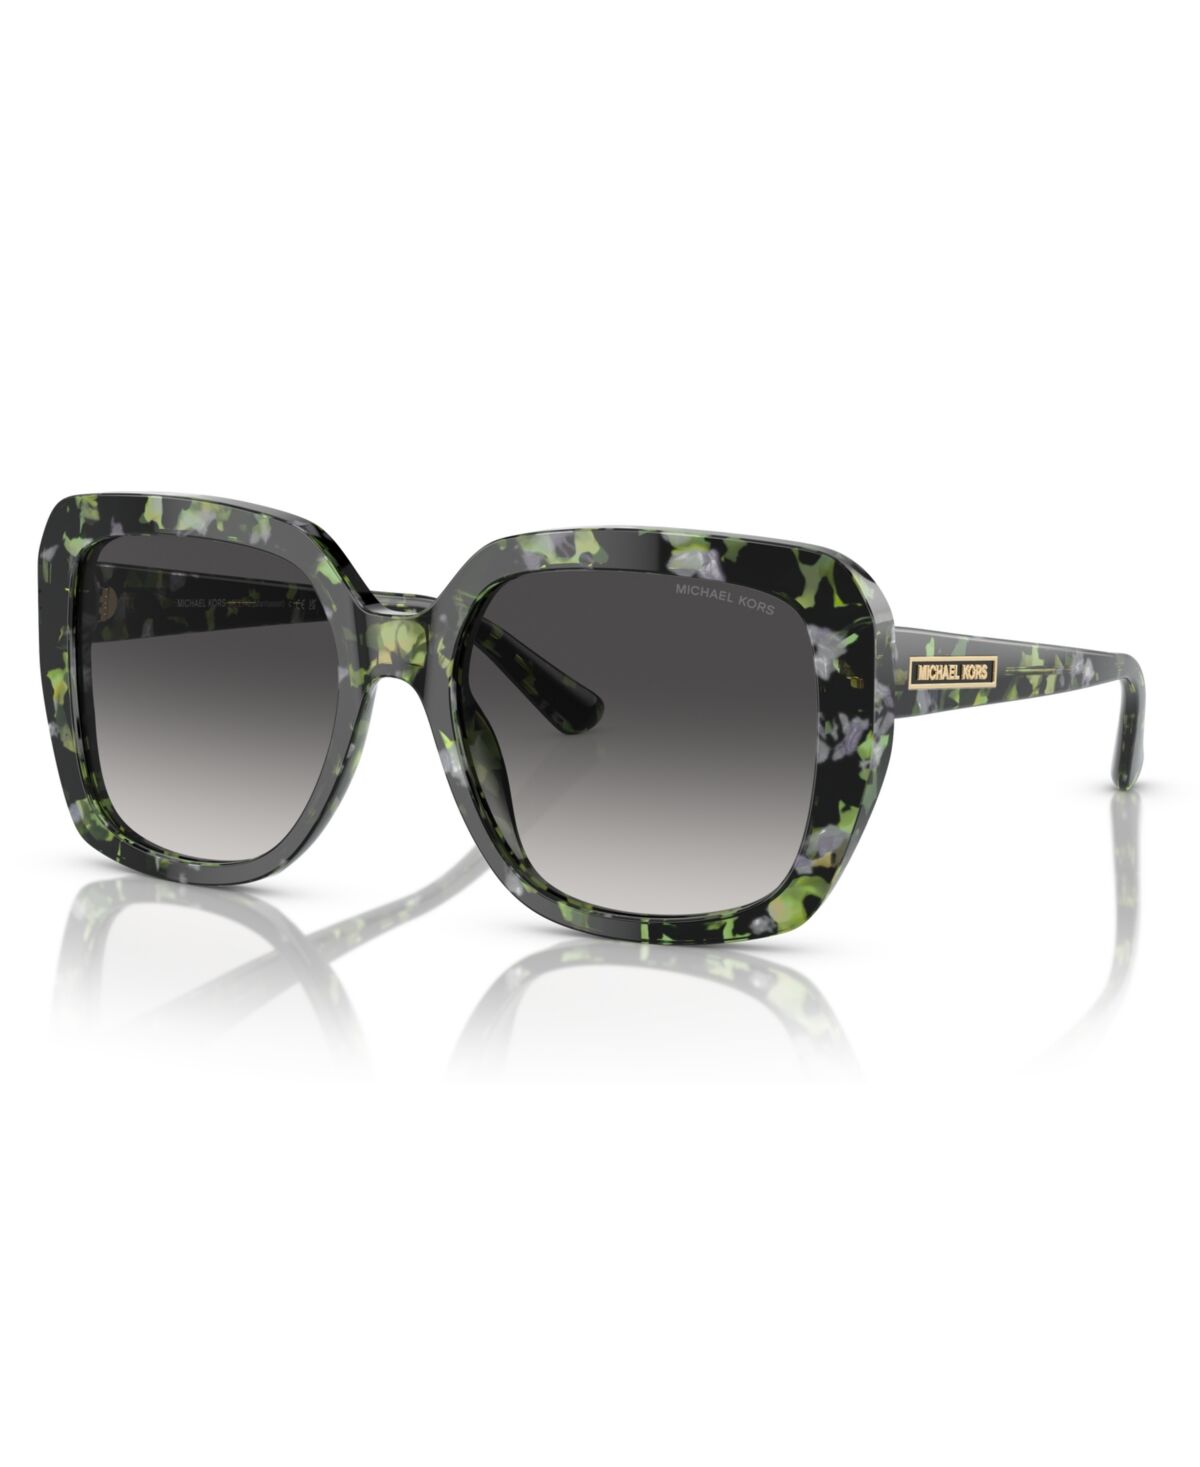 Michael Kors Women's Manhasset Sunglasses, Gradient MK2140 - Green